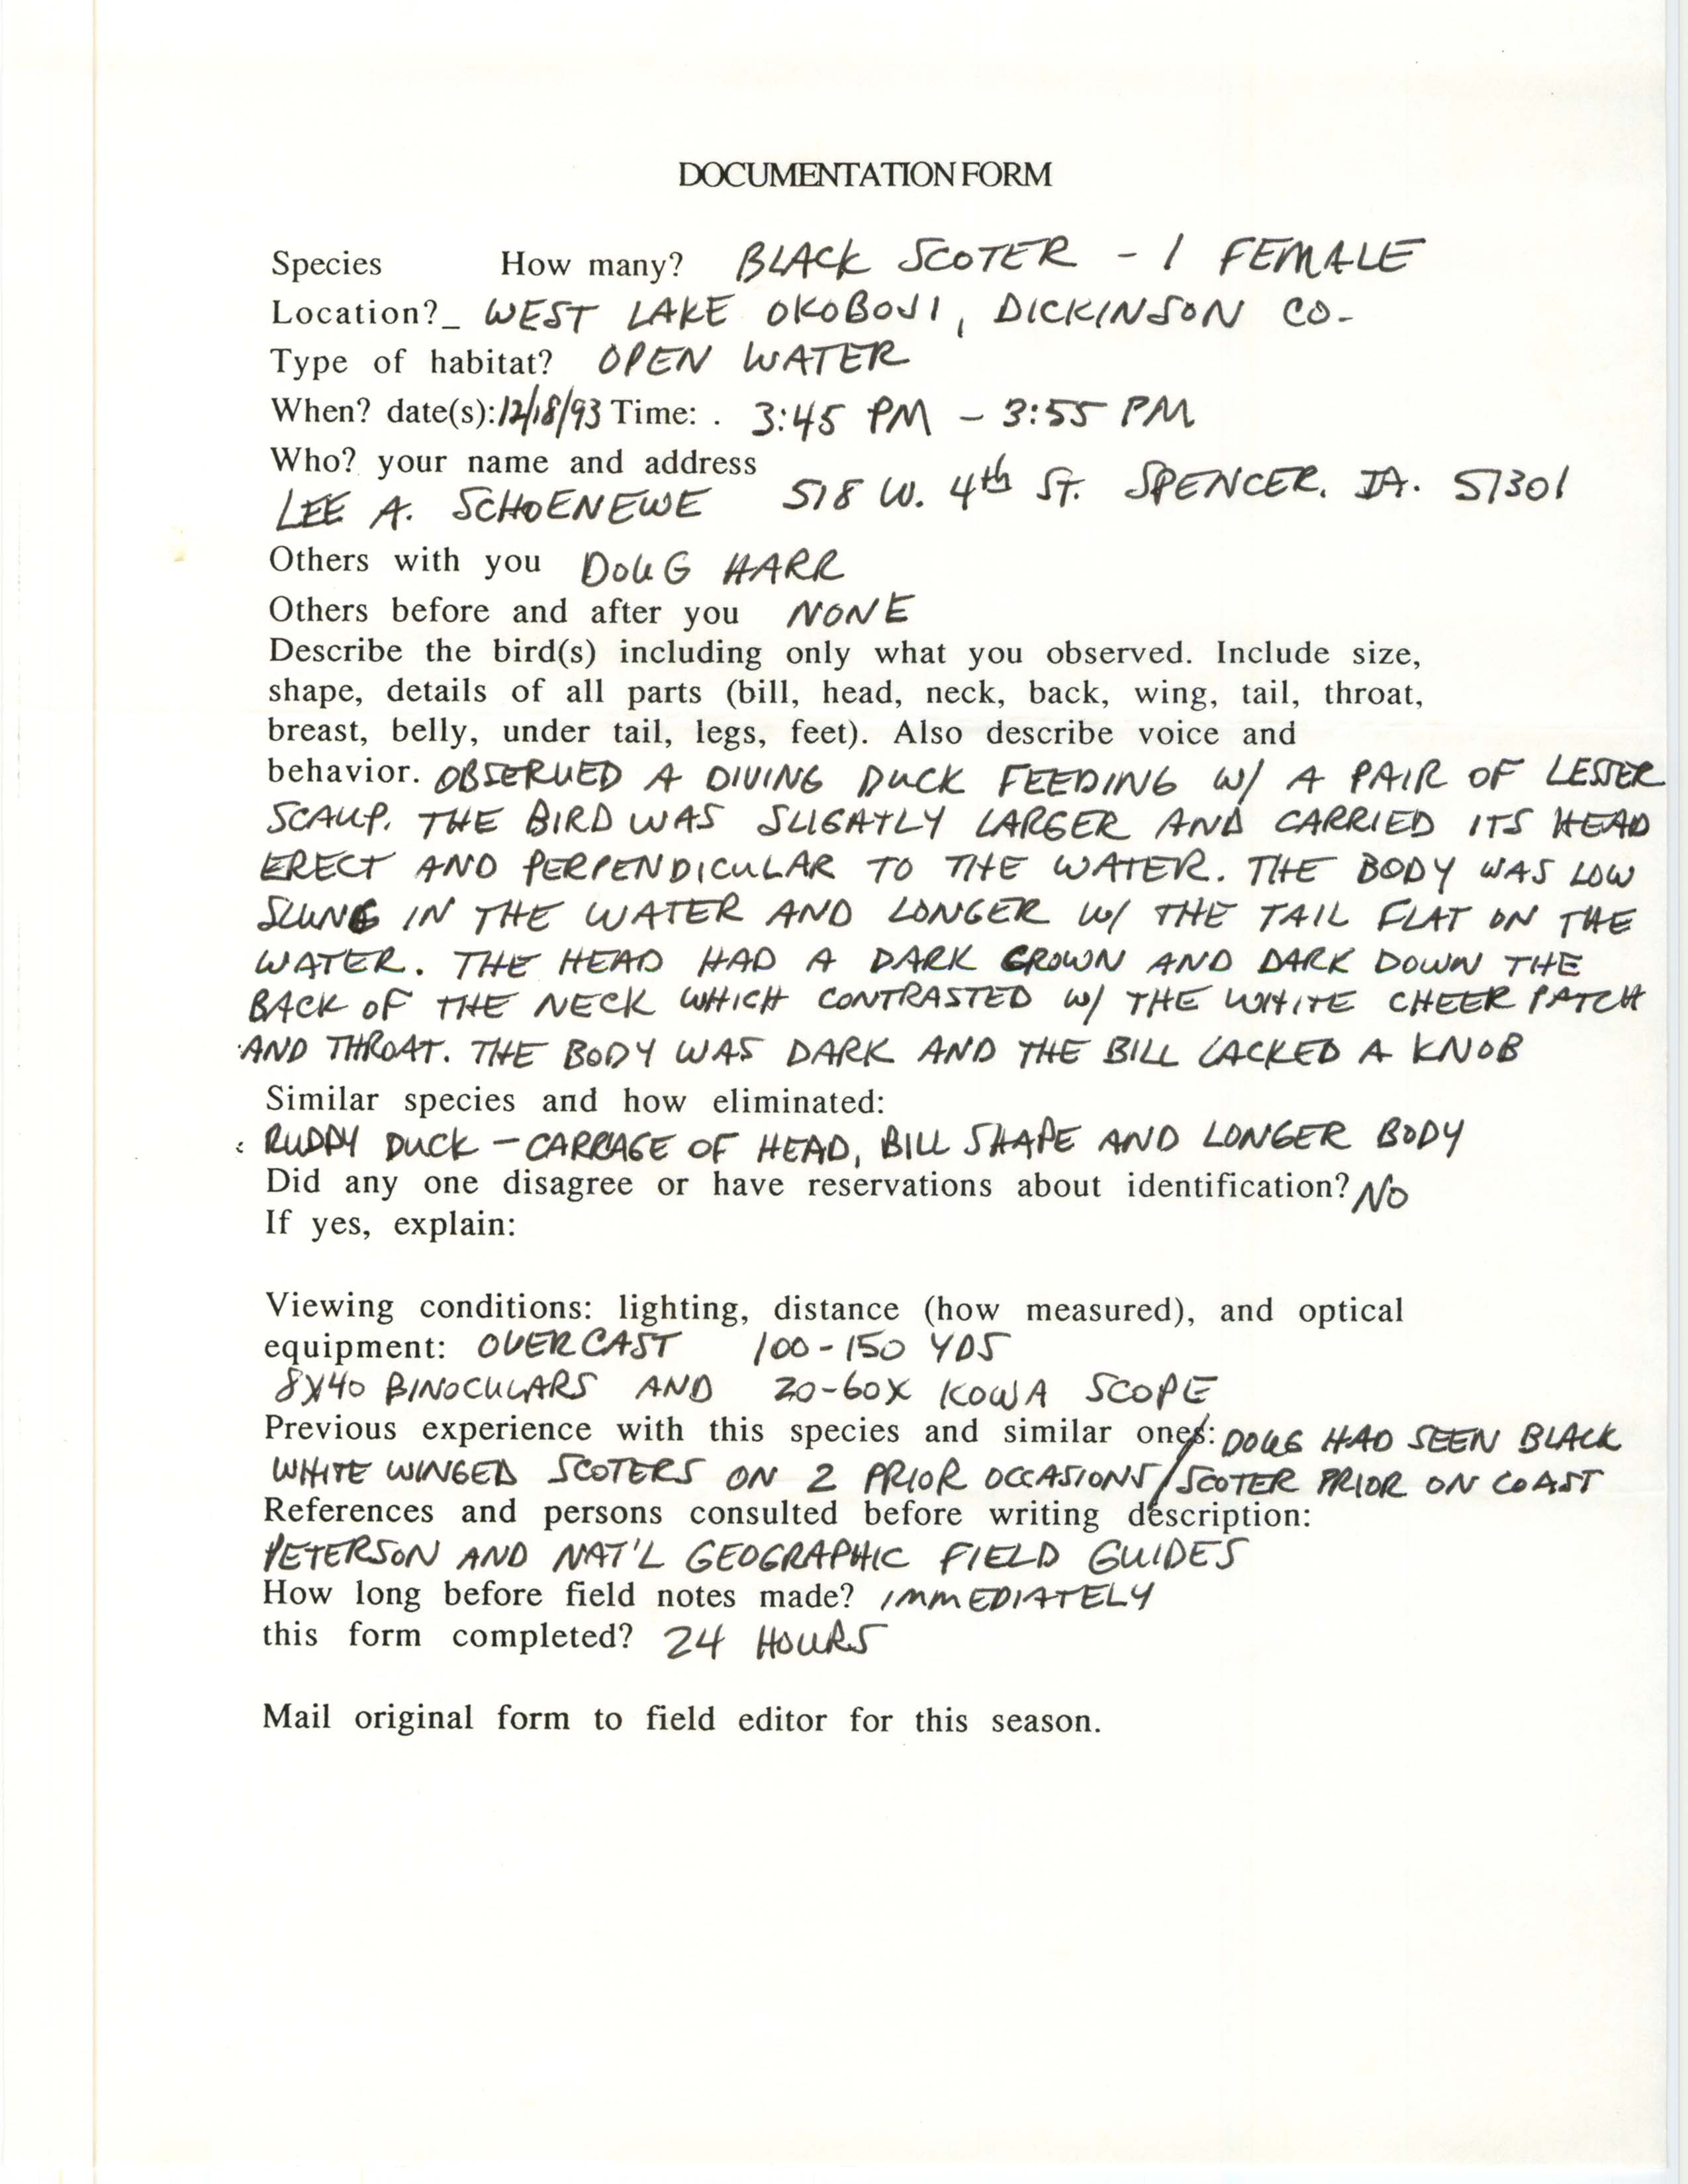 Rare bird documentation form for Black Scoter at West Lake Okoboji, 1993